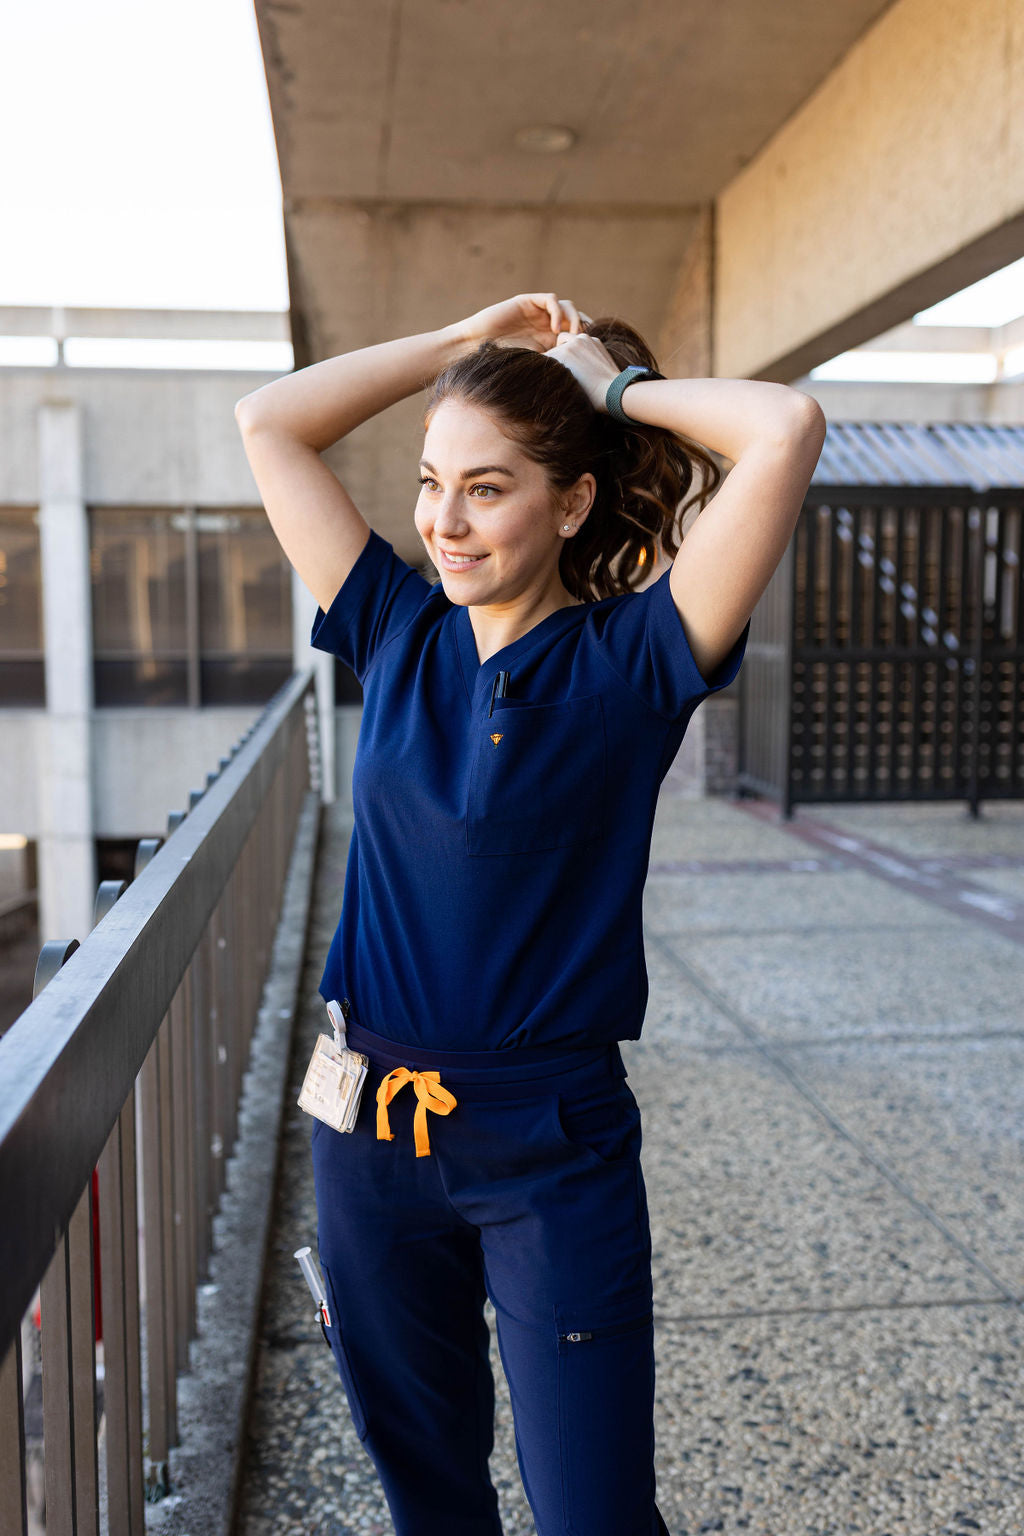 navy blue scrubs for women